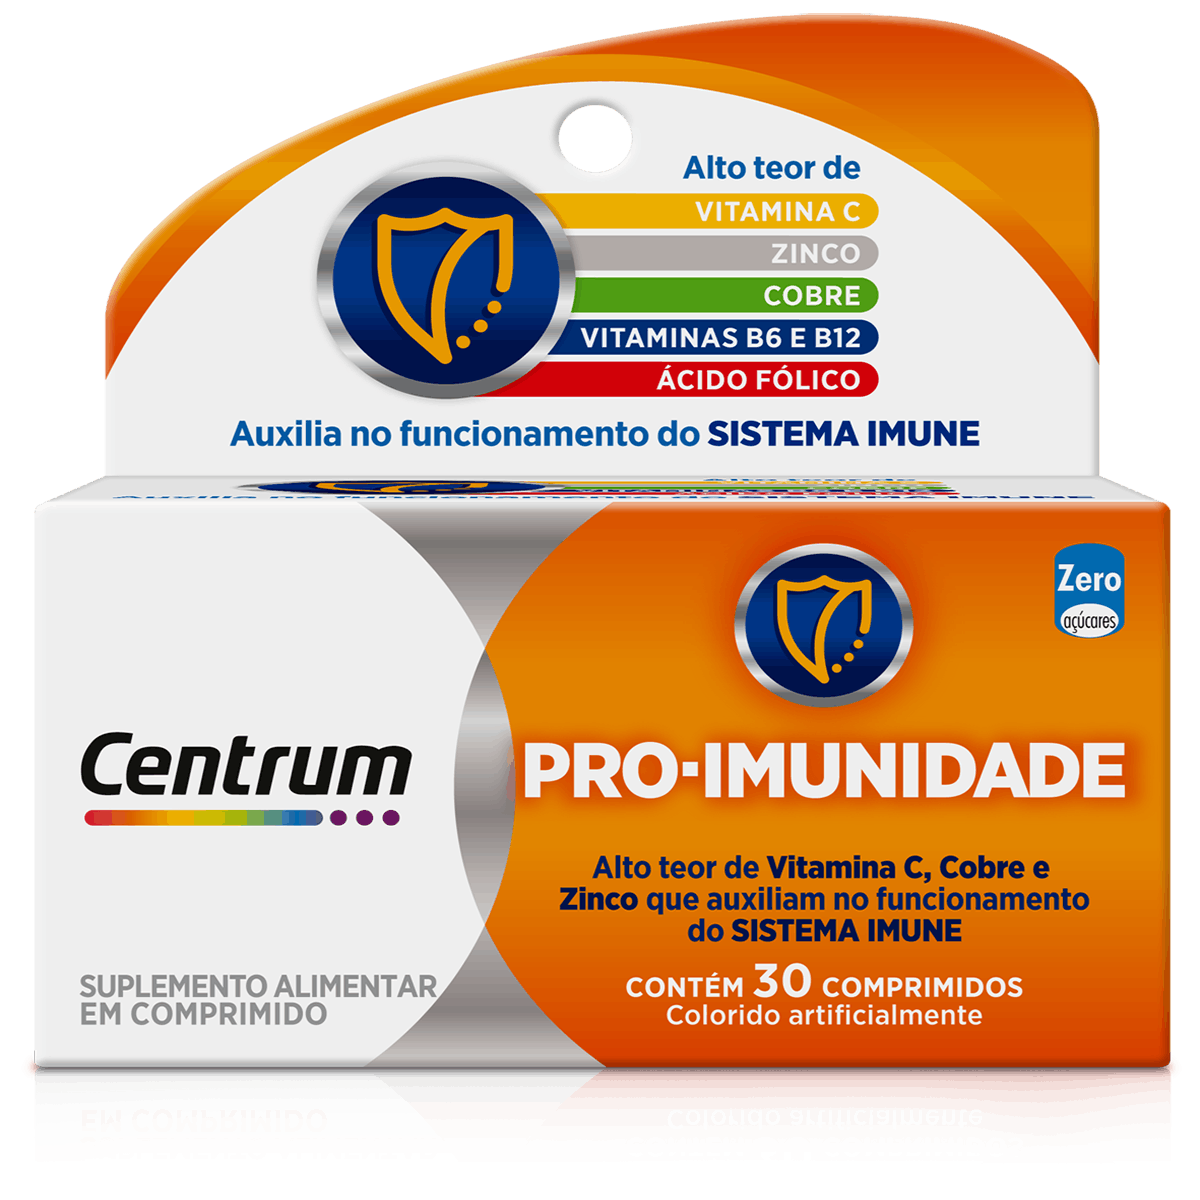 Box of Centrum Pro-Imunidade